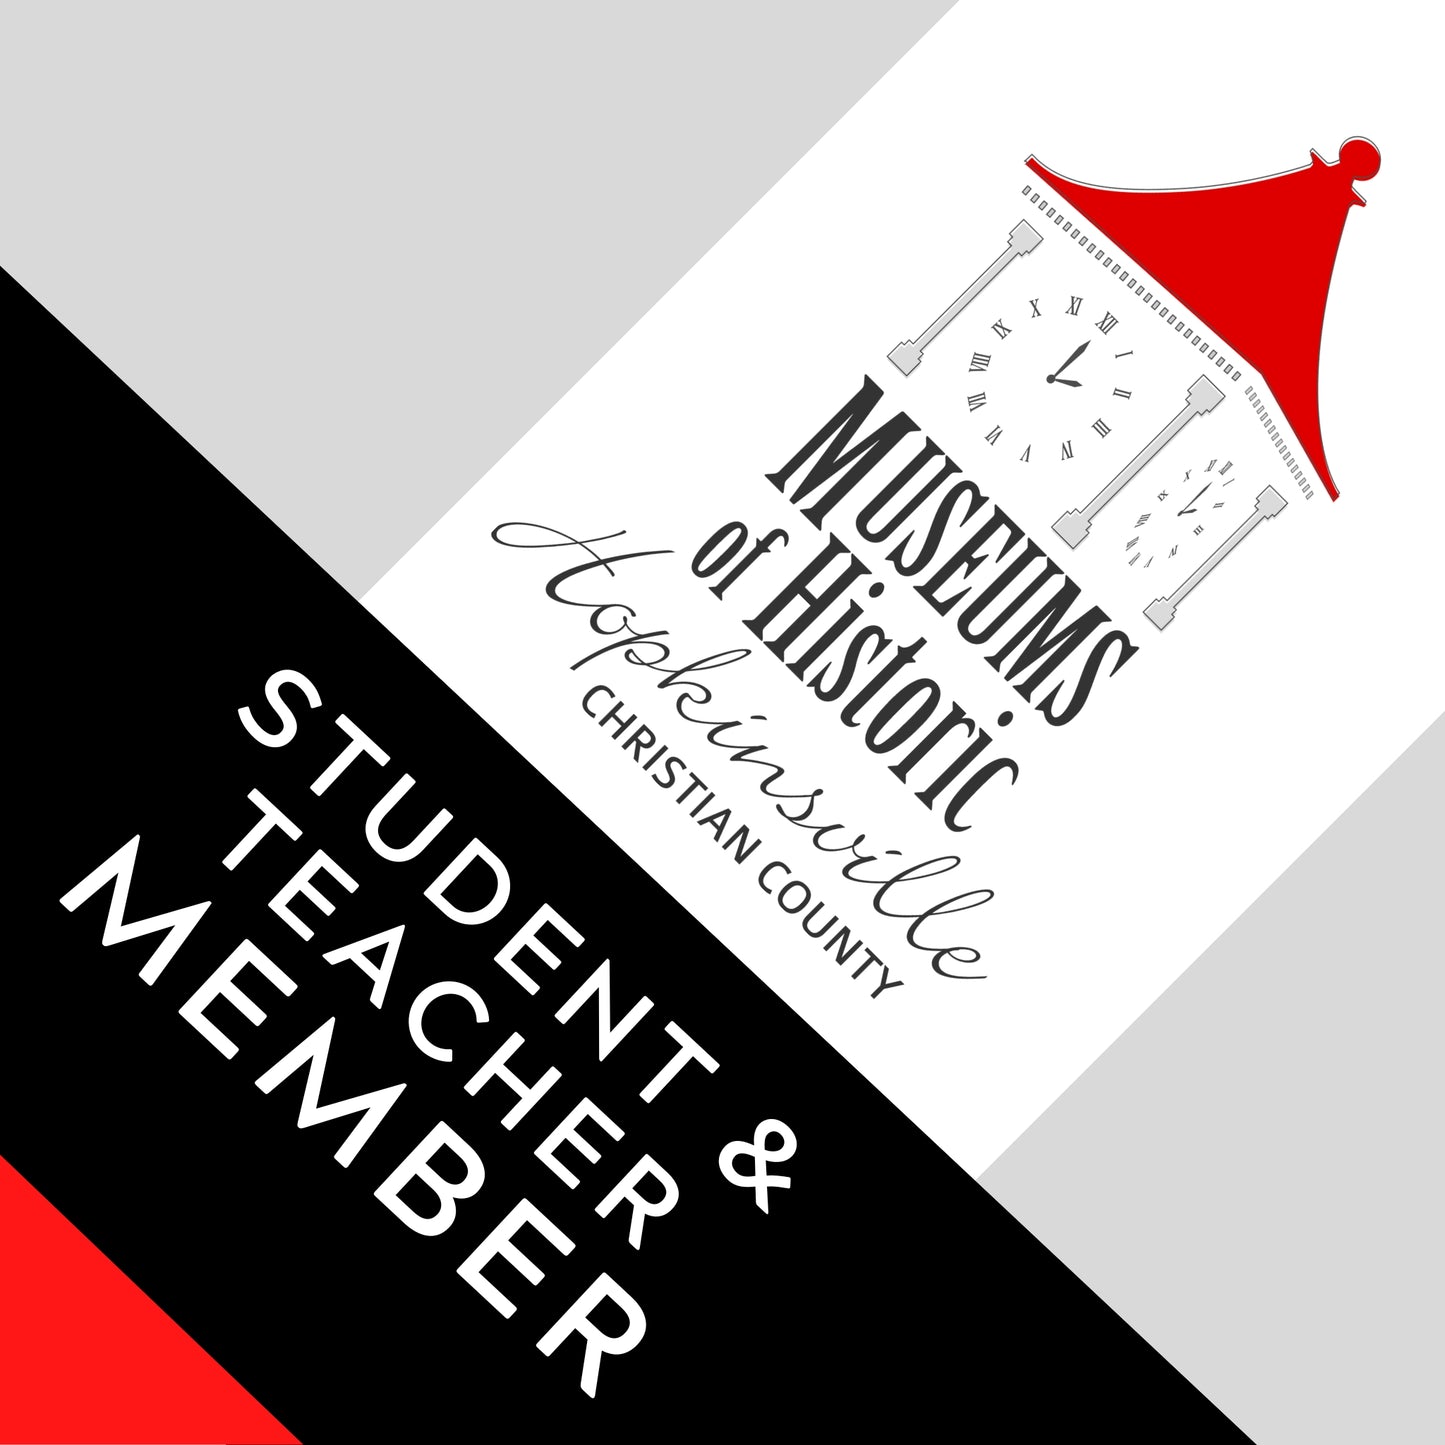 Membership, Student/Teacher